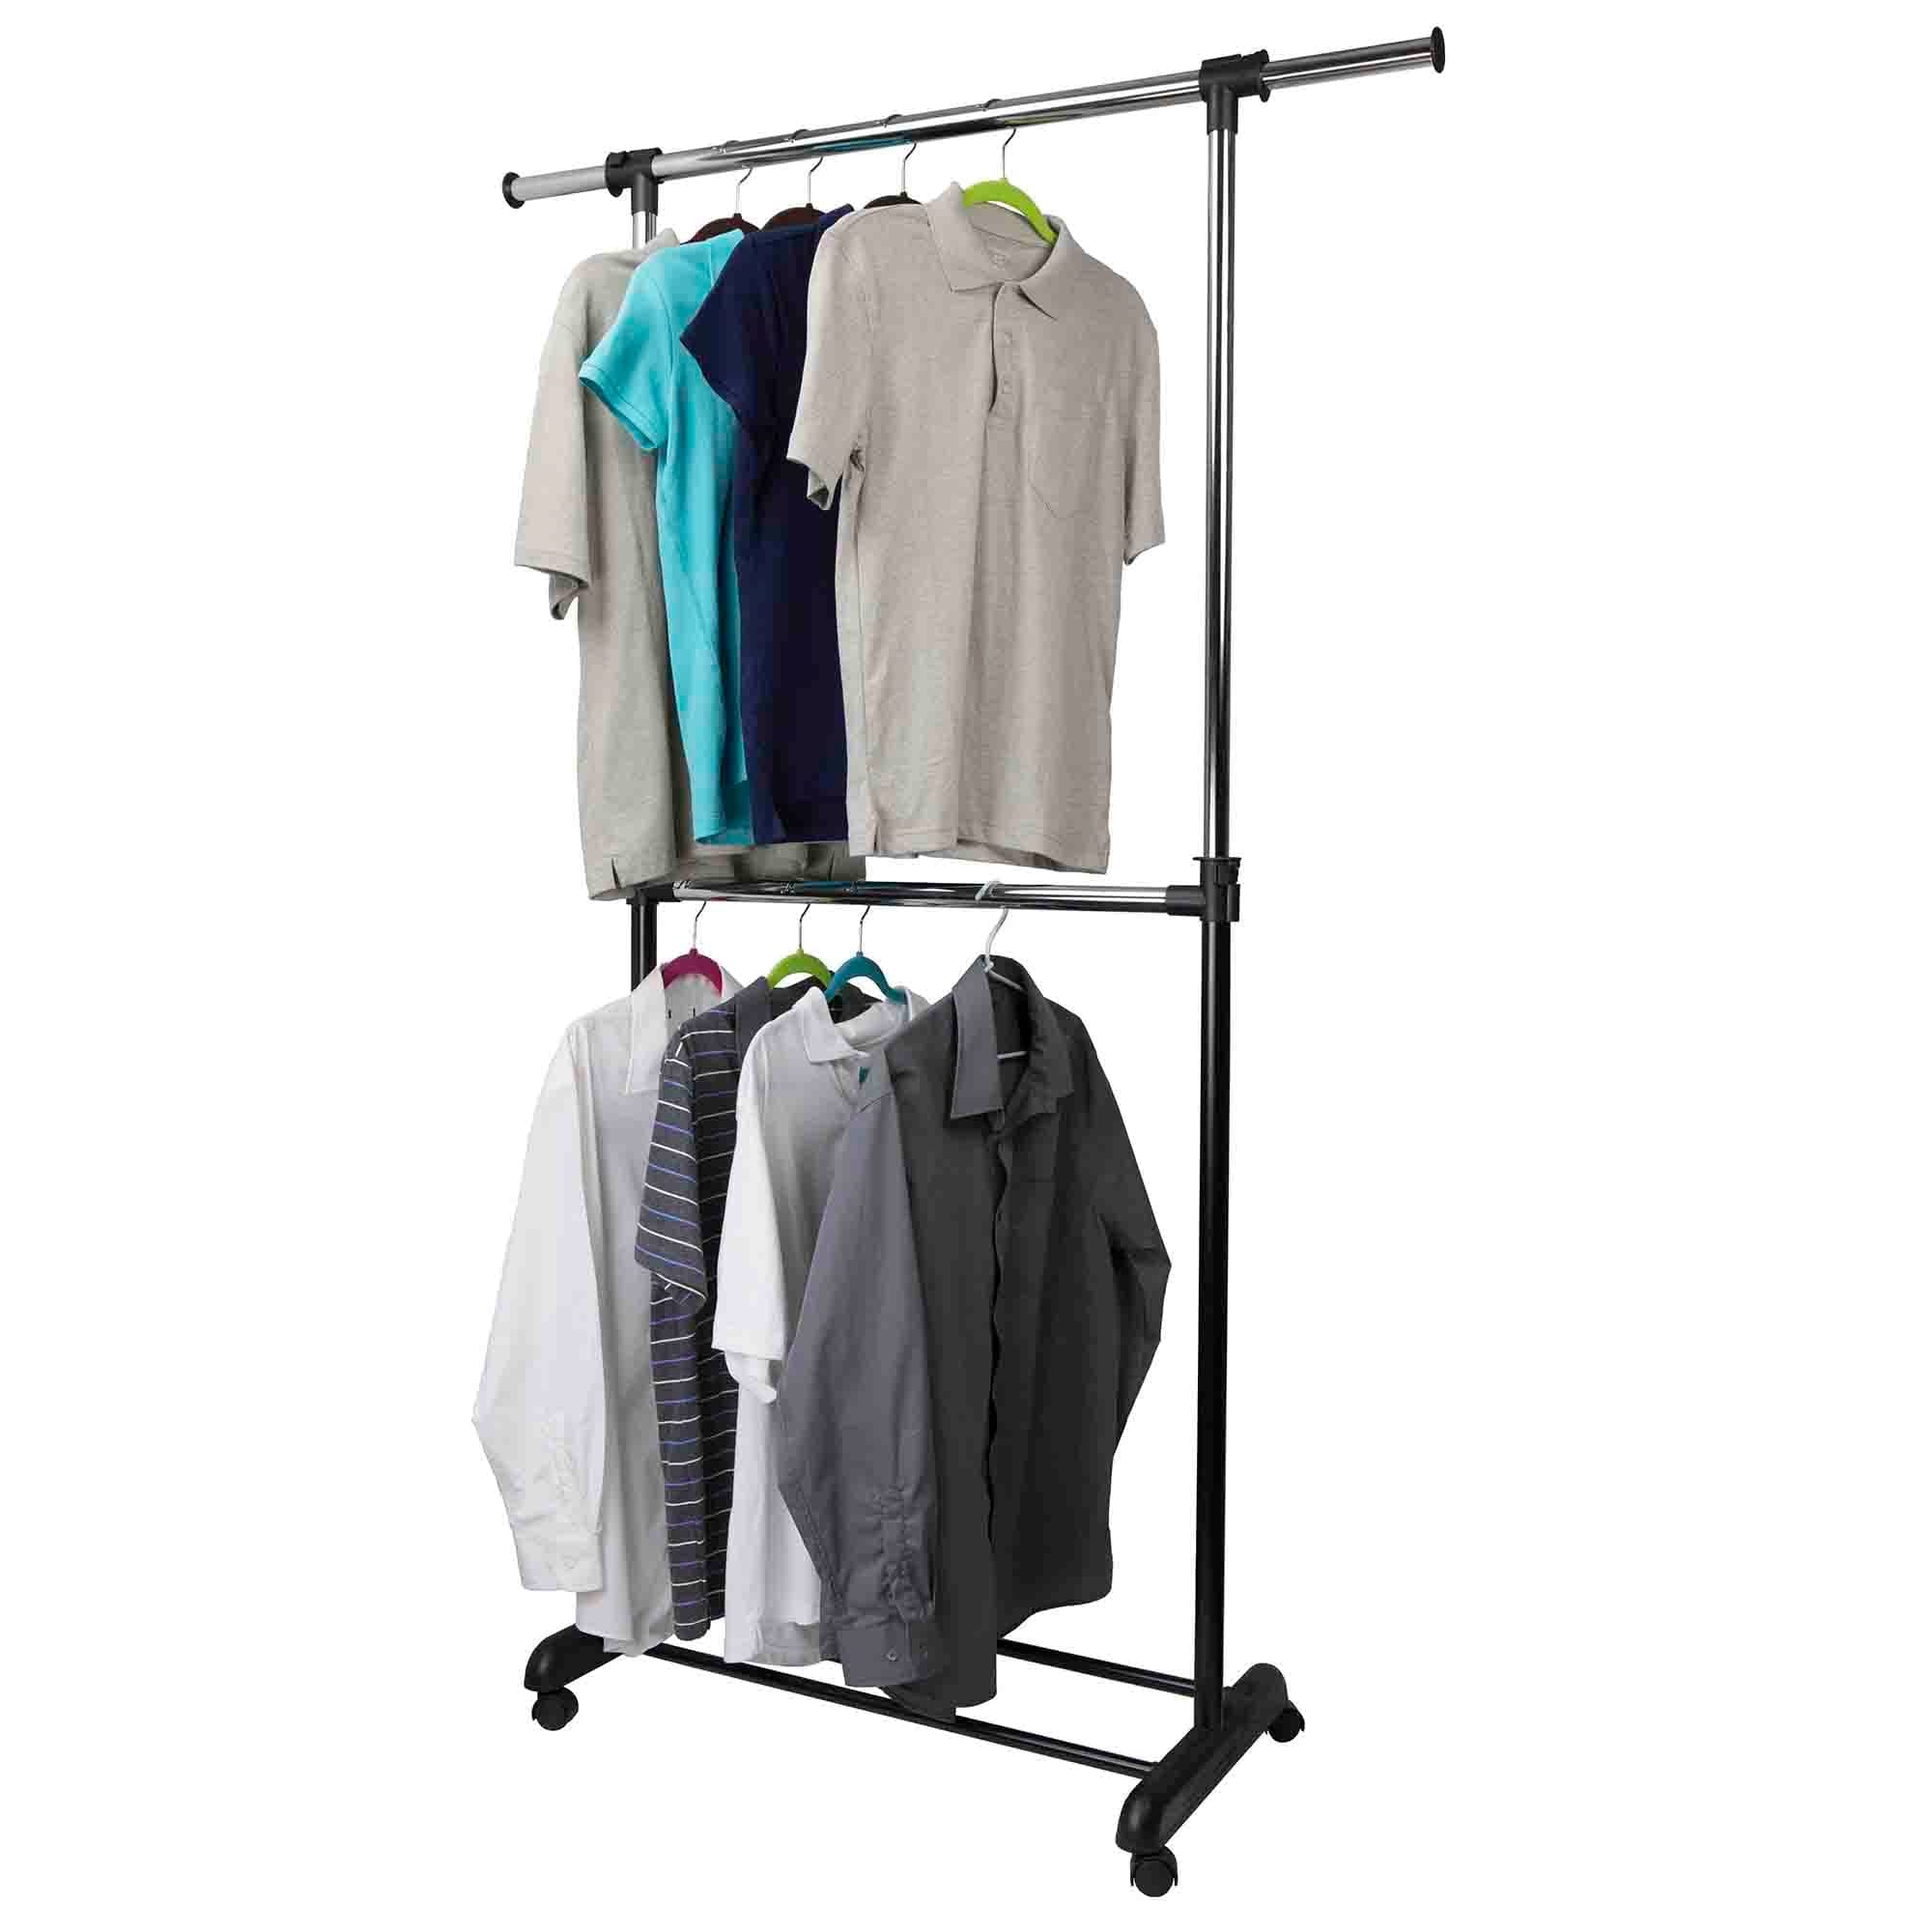 Home Basics 2 Tier Expandable Garment Rack, Black $20.00 EACH, CASE PACK OF 6